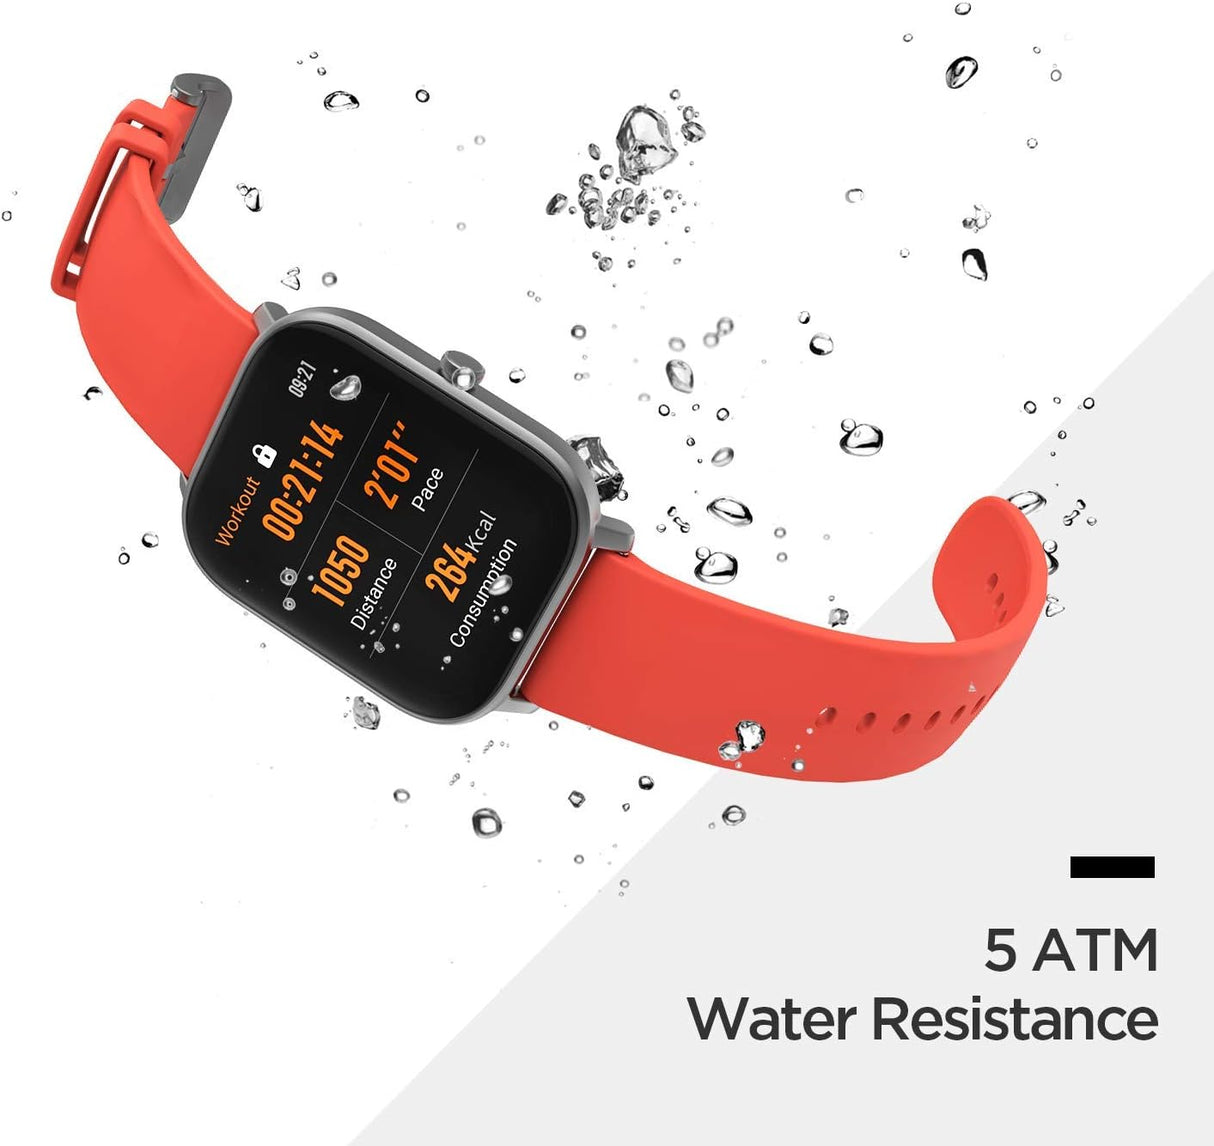 Amazfit GTS Smart Watch